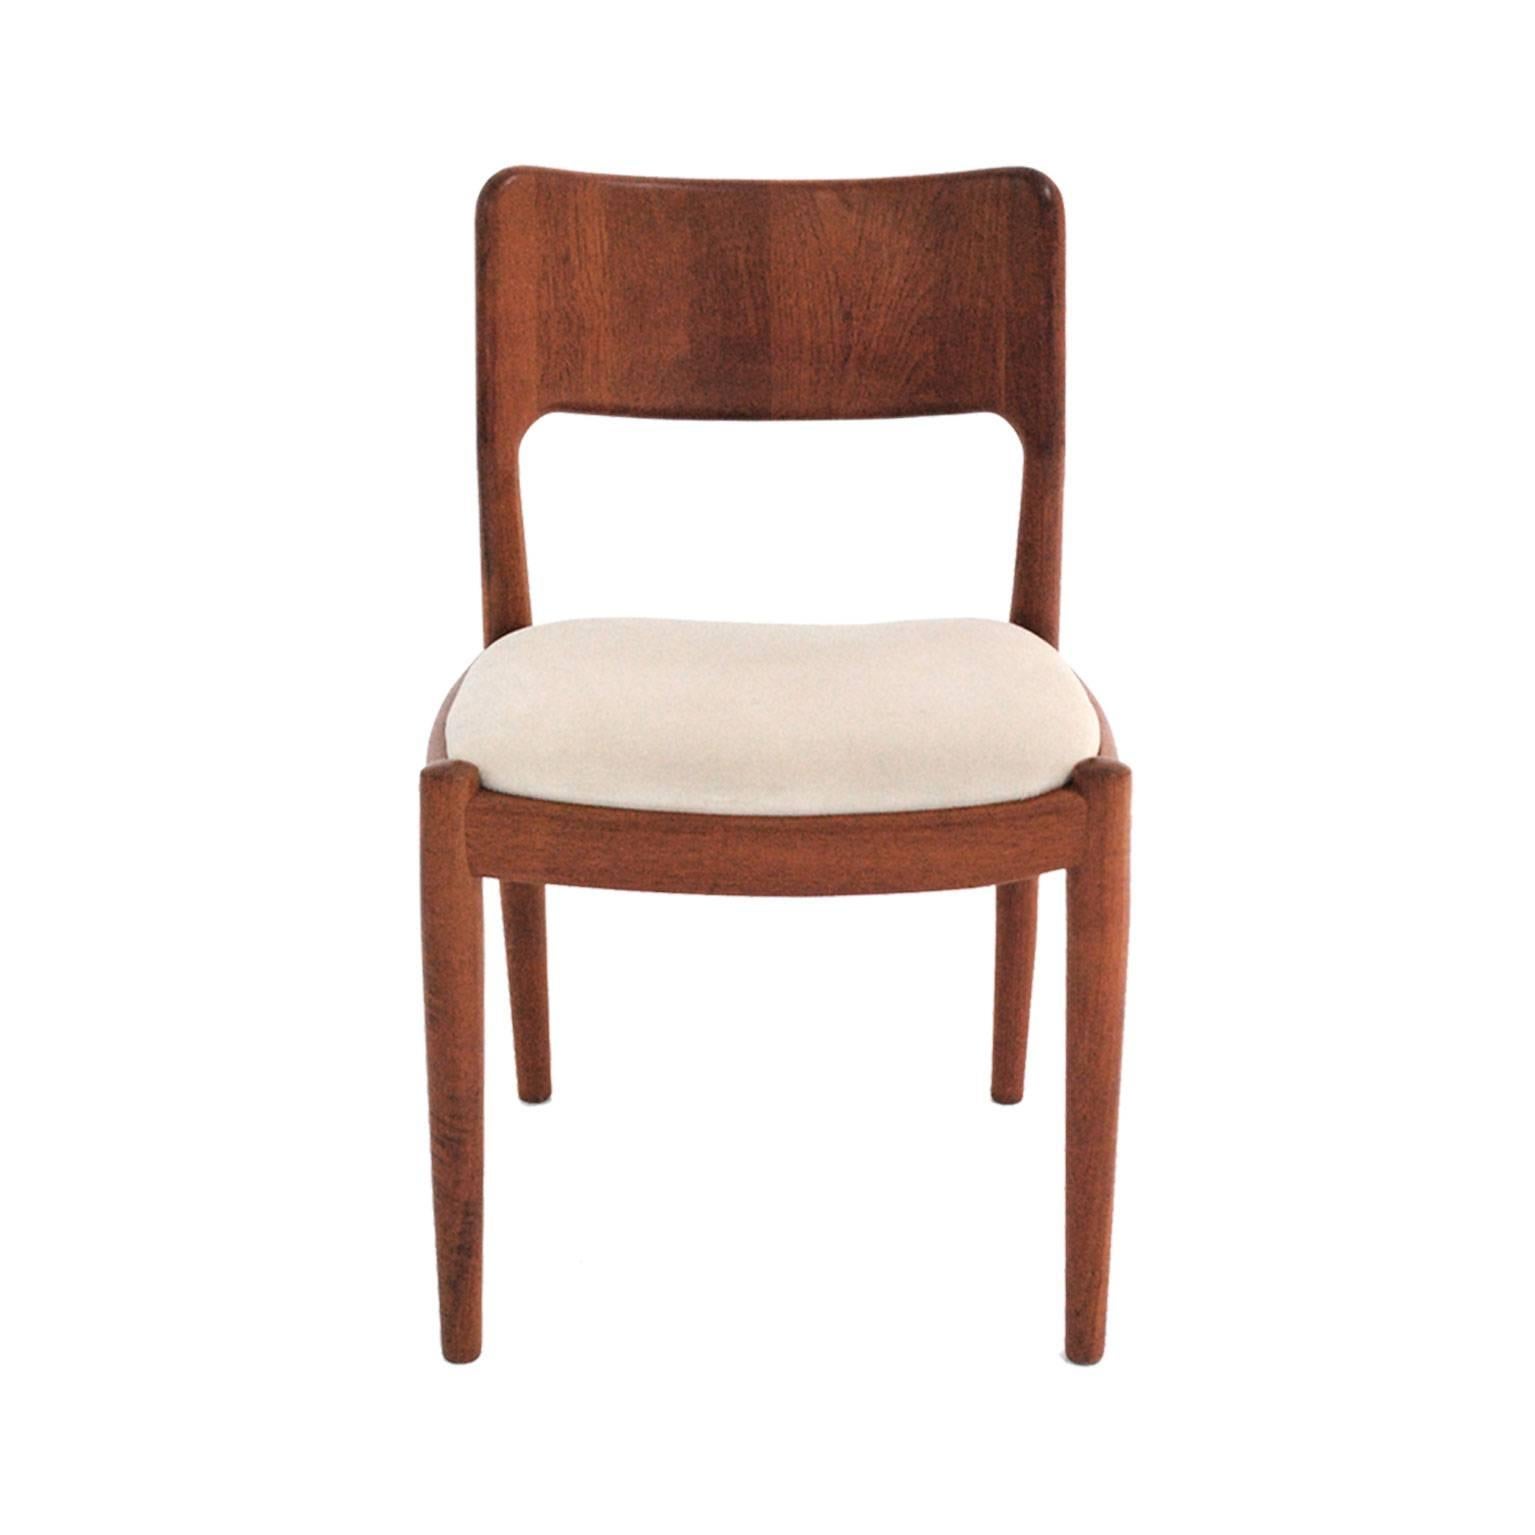 German Set of Four Chairs Designed by Niels Møller for J.L. Moller